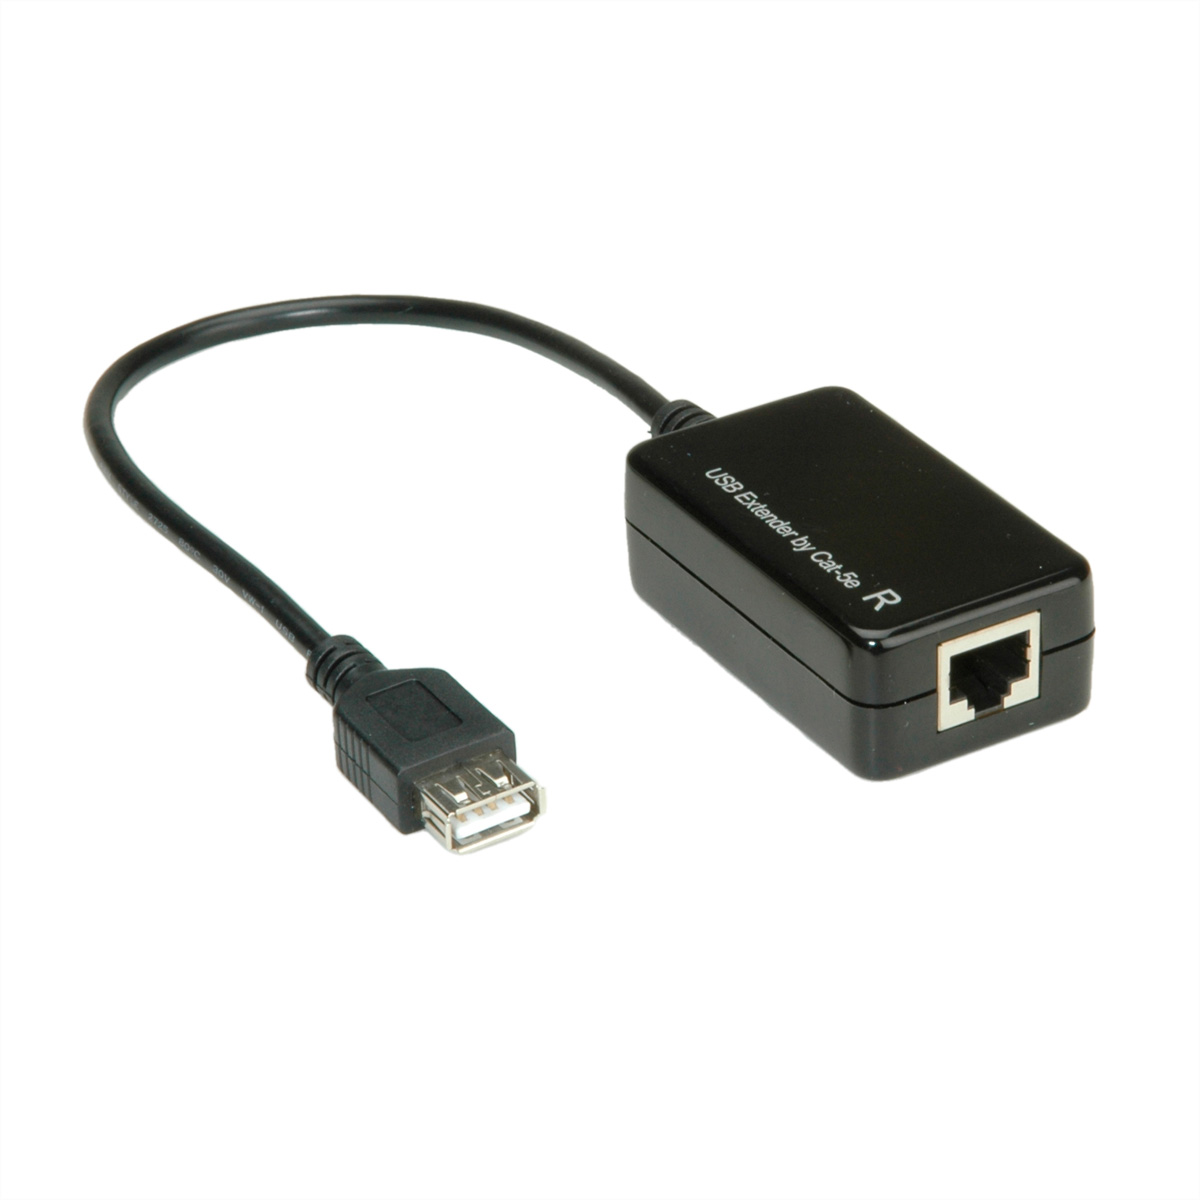 1.1 Verlängerung USB RJ45, max. 45m über USB-Verlängerung VALUE